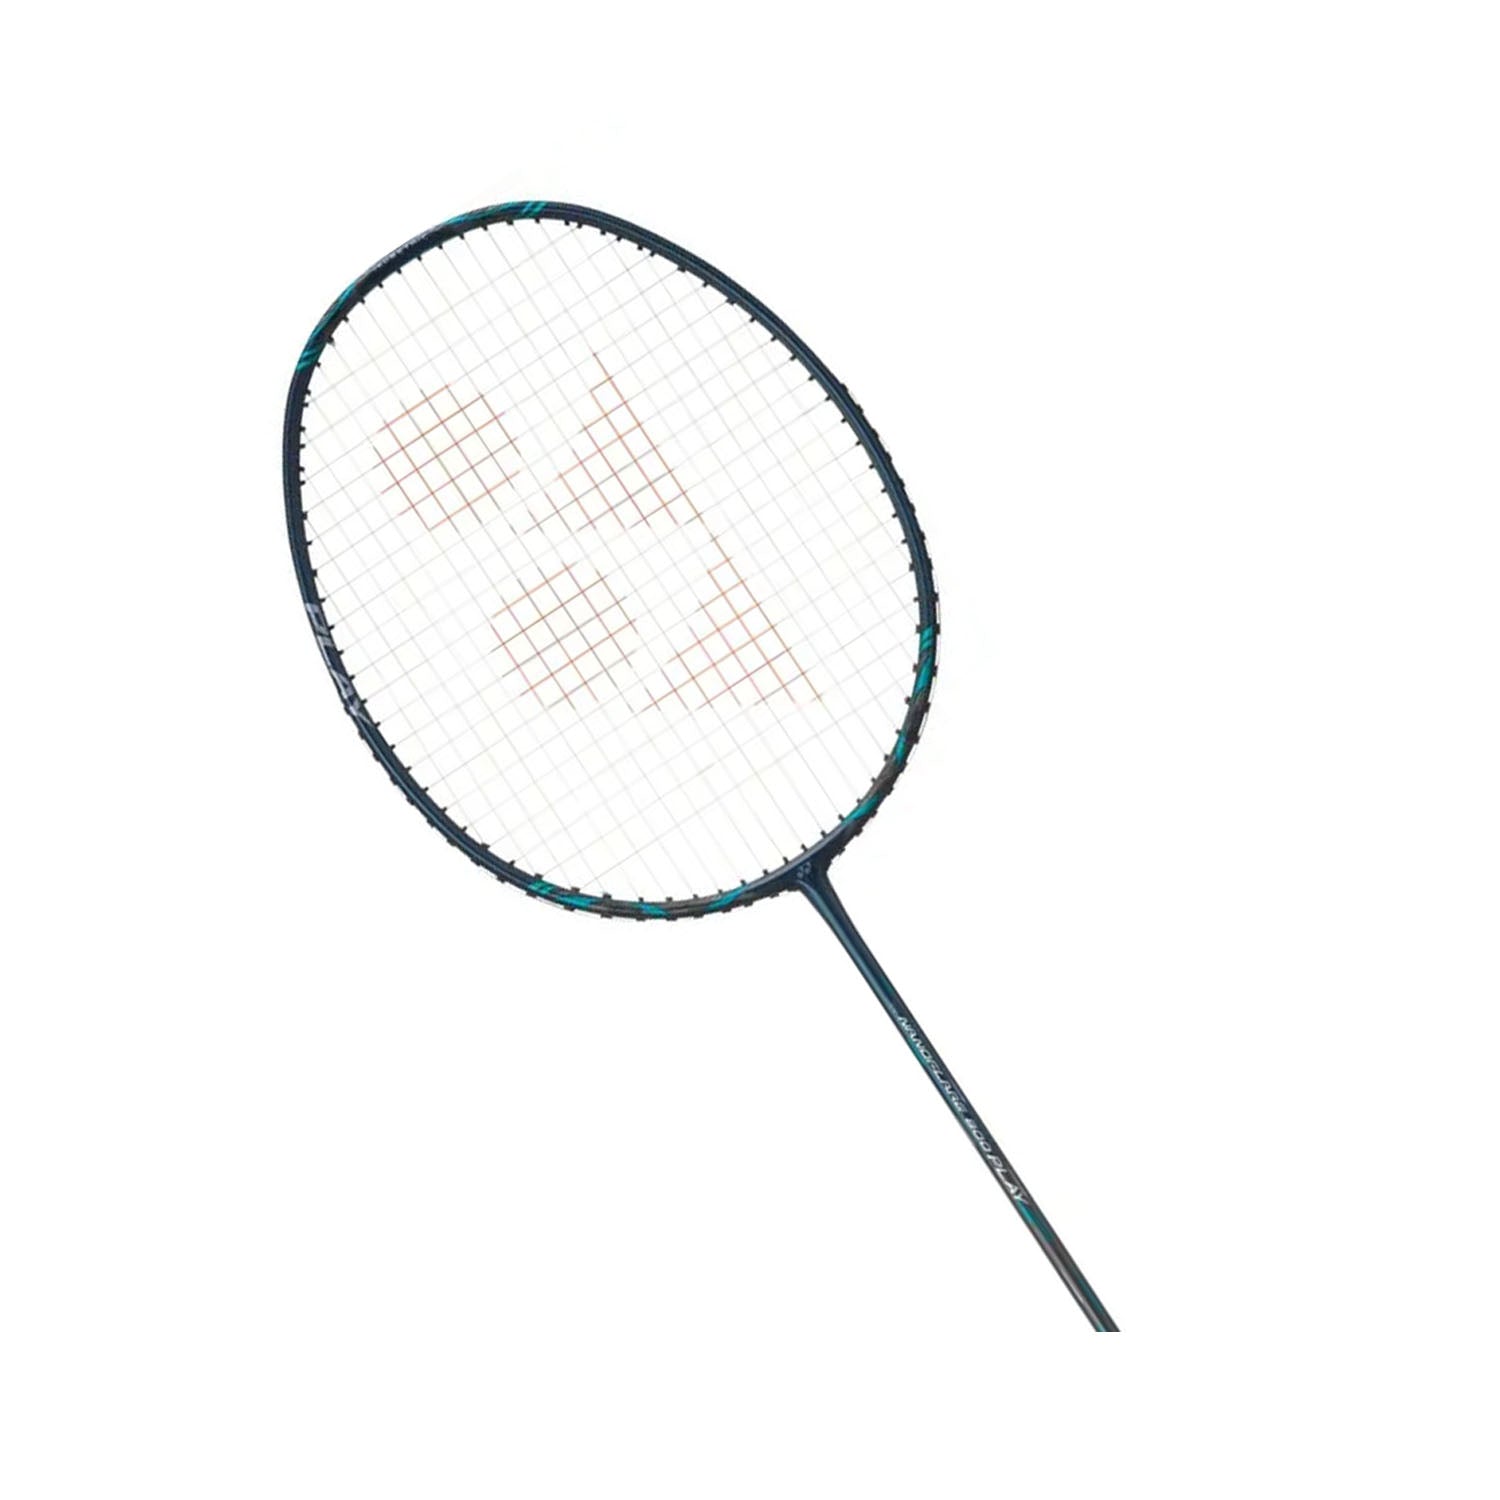 Yonex Nanoflare 800 Play Strung Badminton Racquet, Deep Green - Best Price online Prokicksports.com